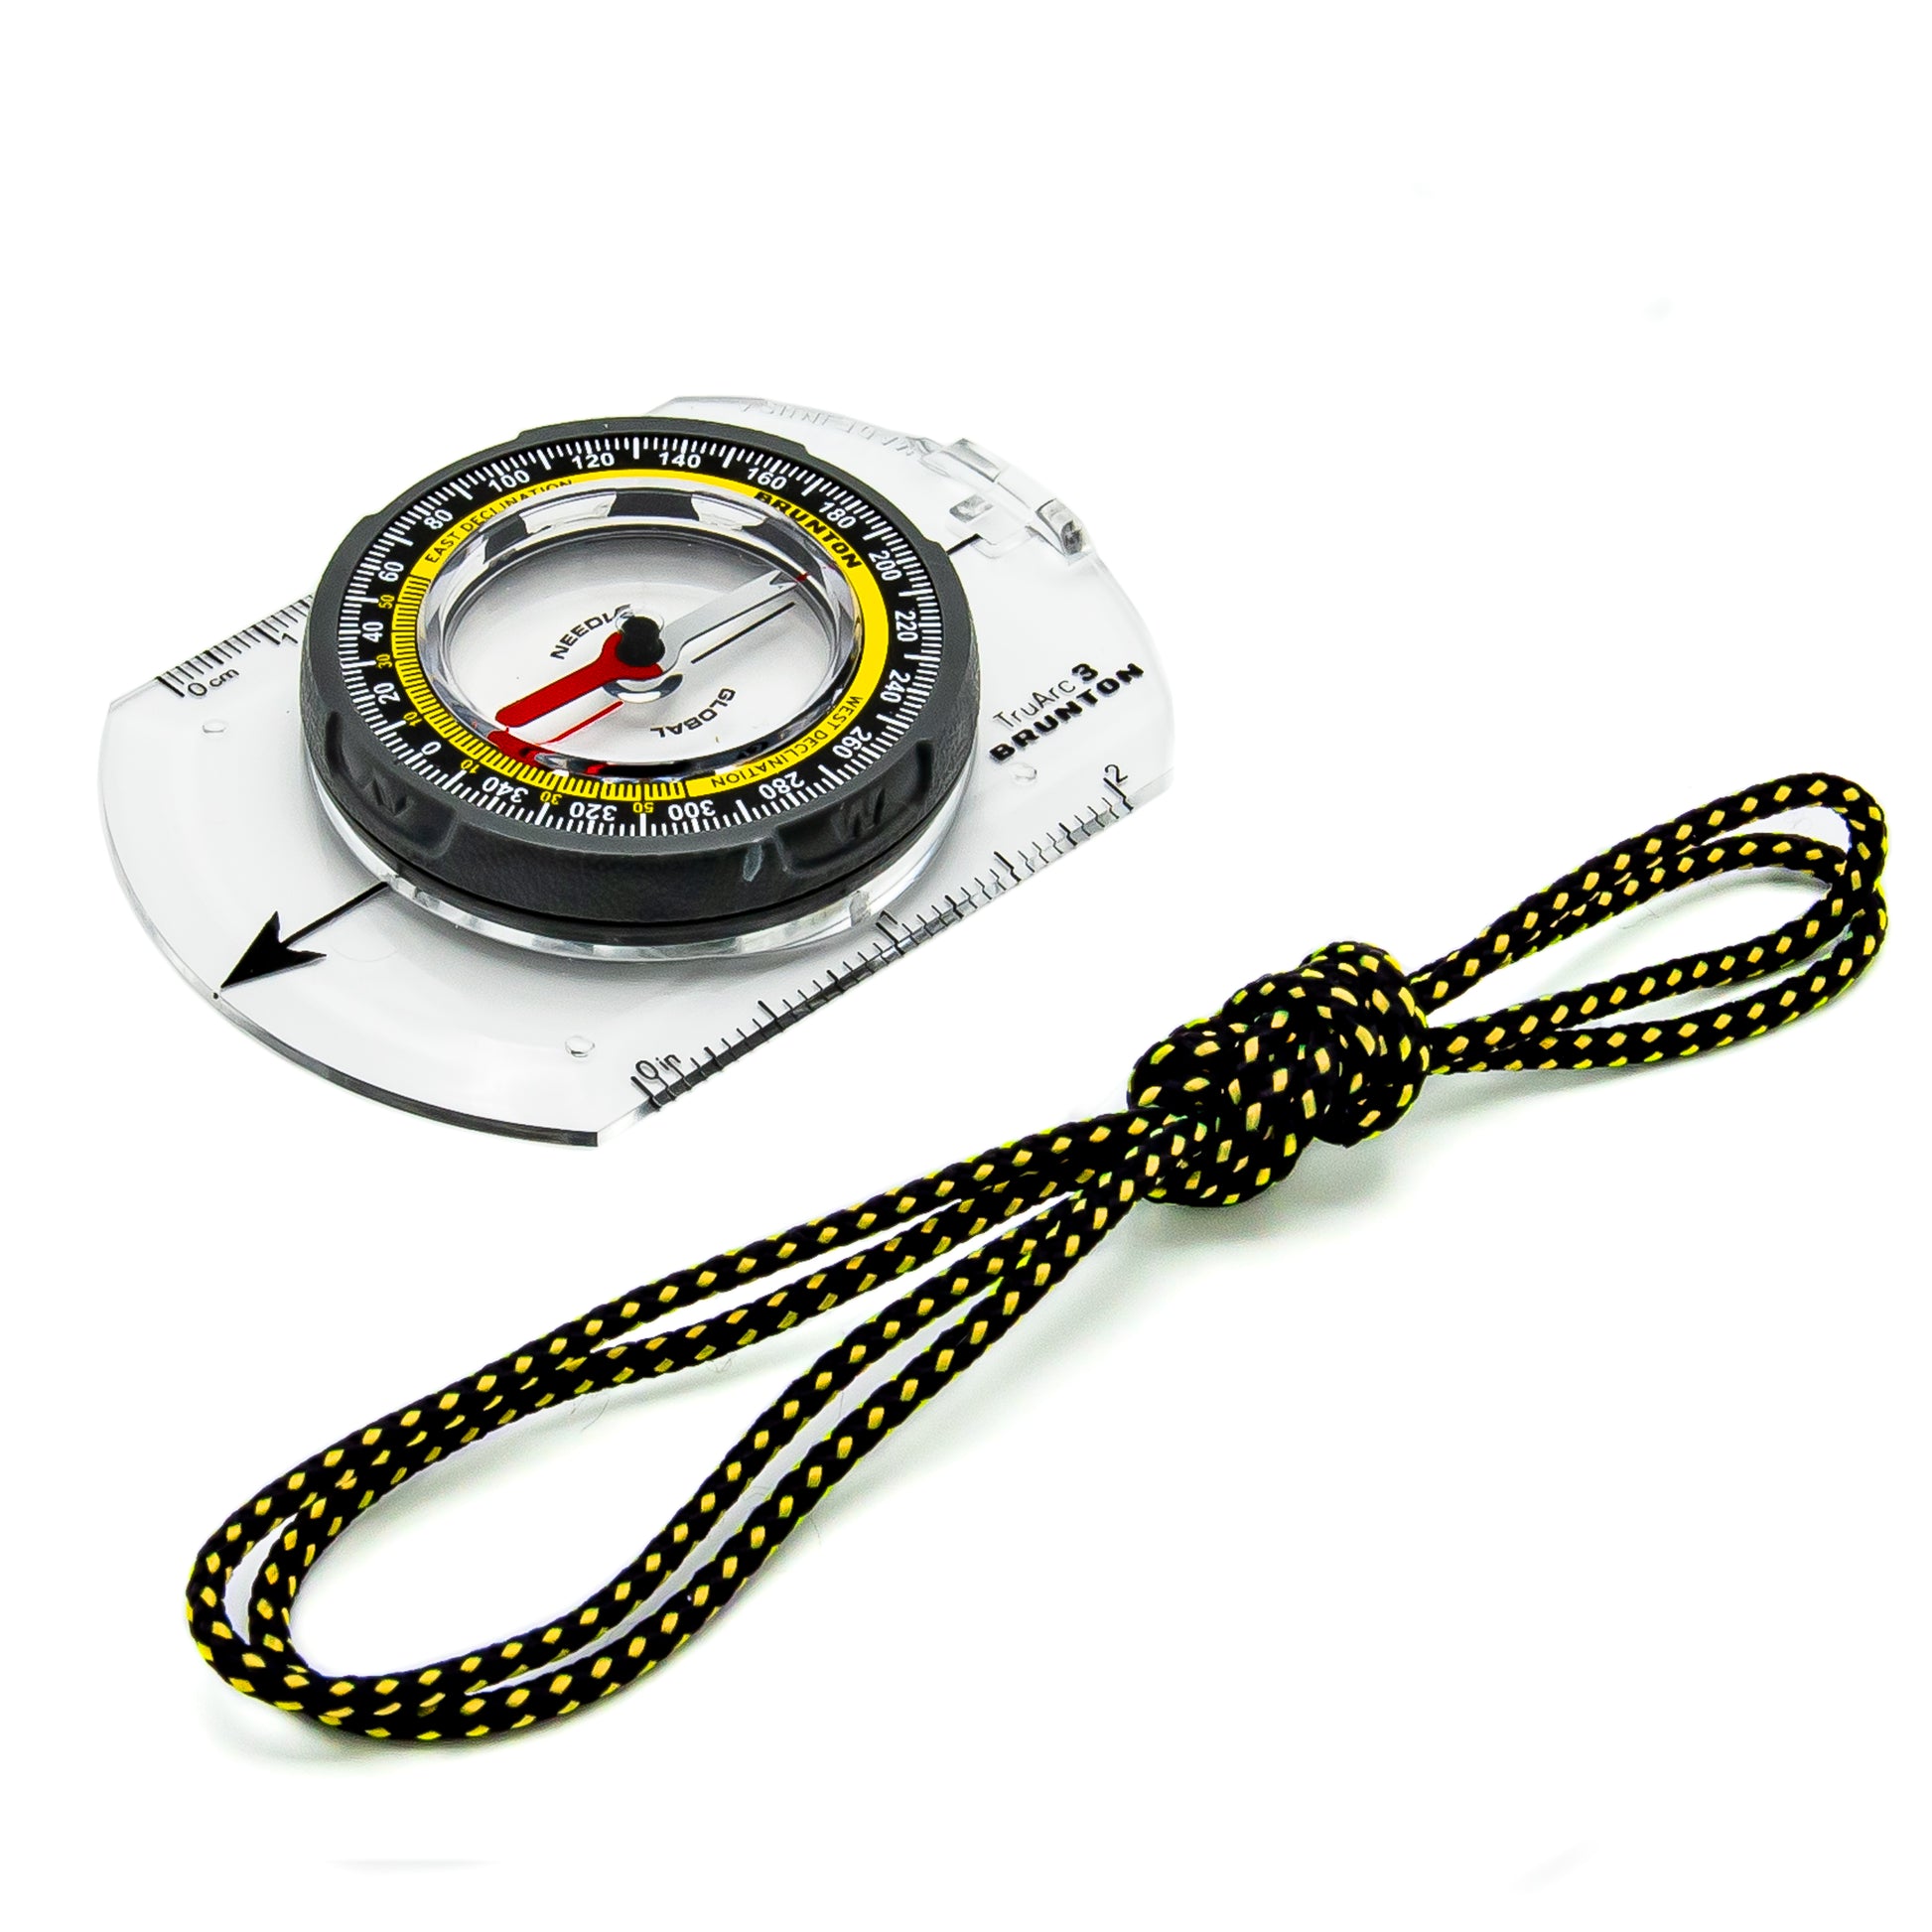 Brunton TruArc 10 Compass - 715070, Compasses & Multi Tools at Sportsman's  Guide